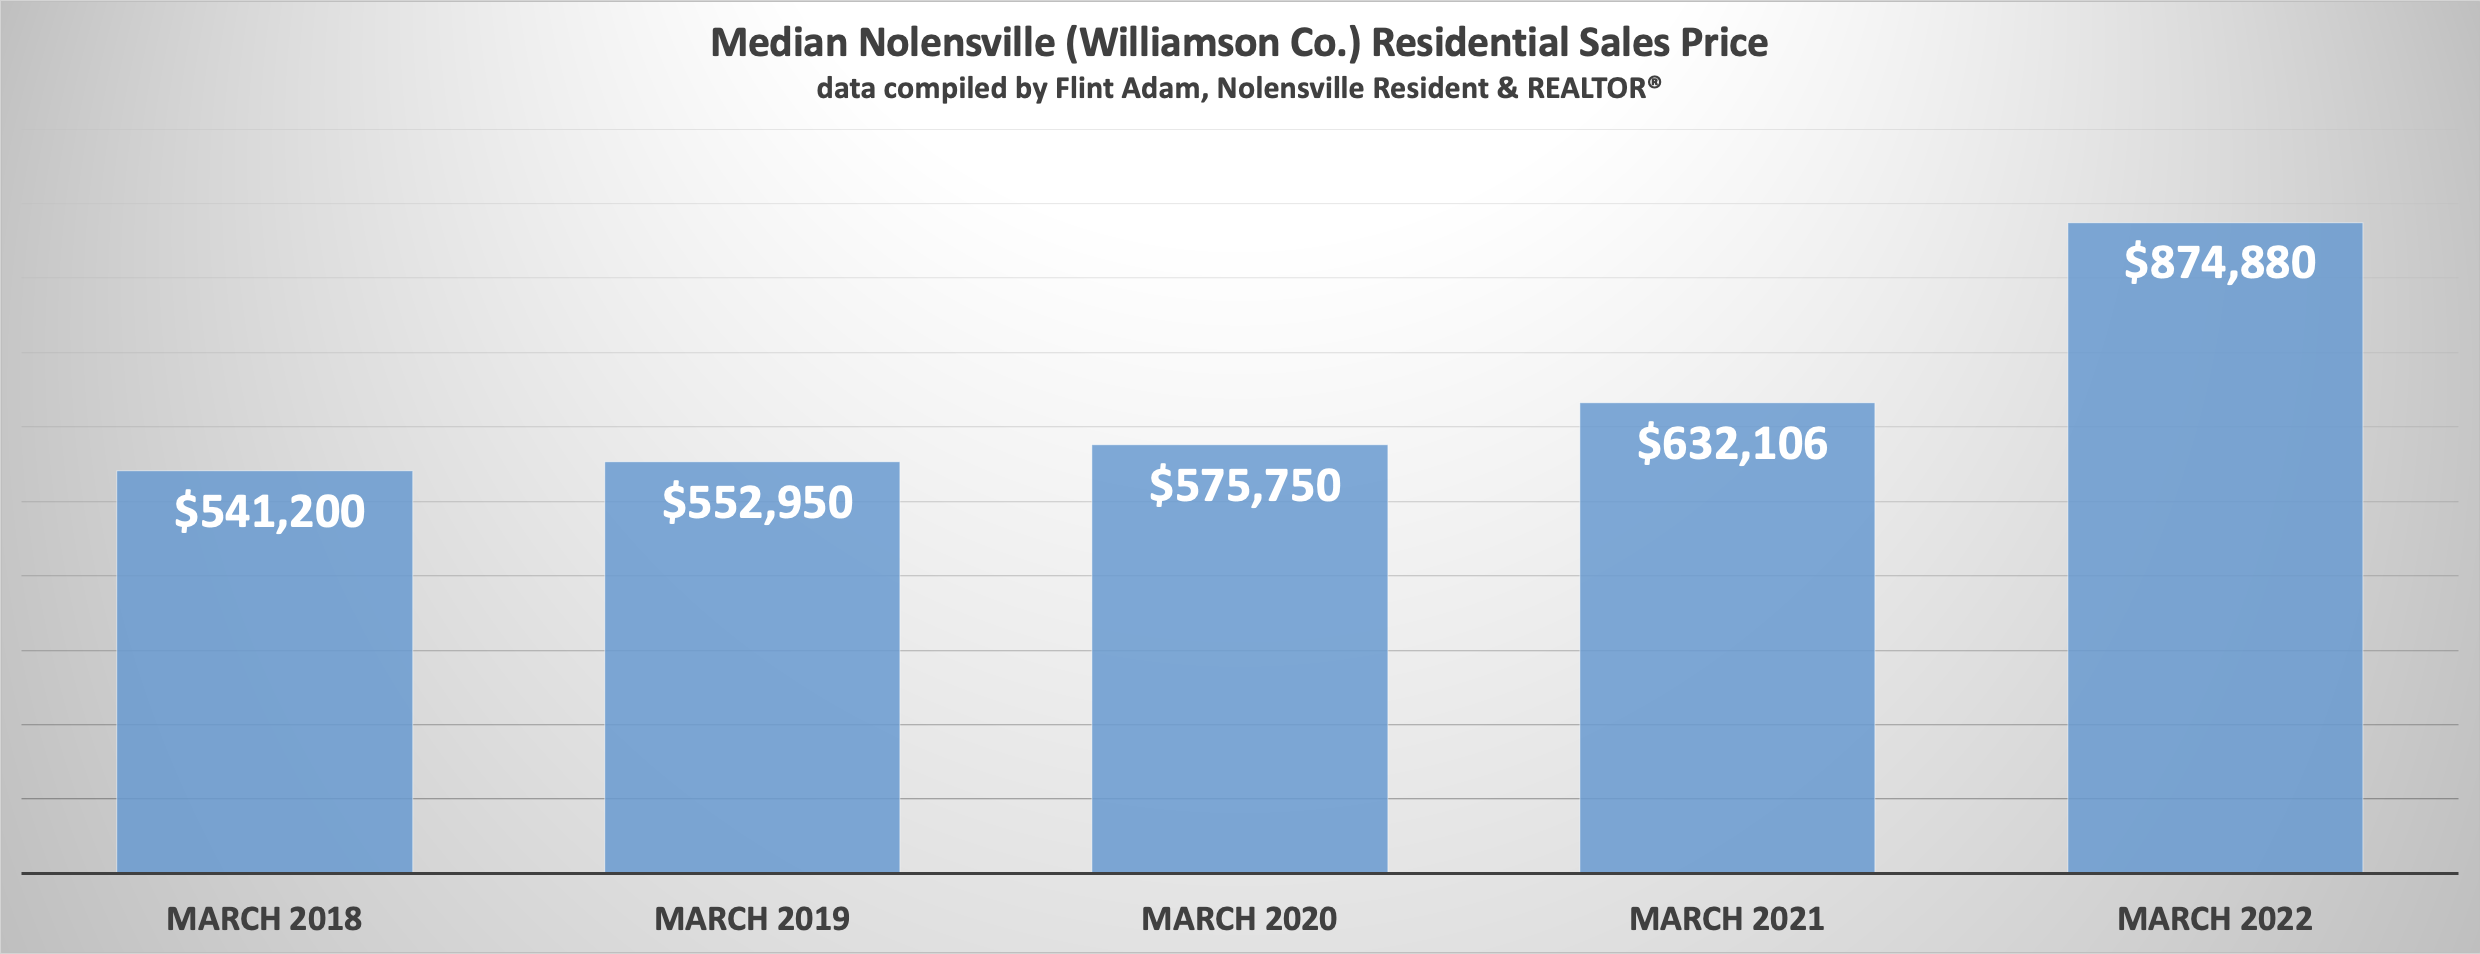 Nolensville (Williamson Co.) Median Sales Price - March 2018 - 2022